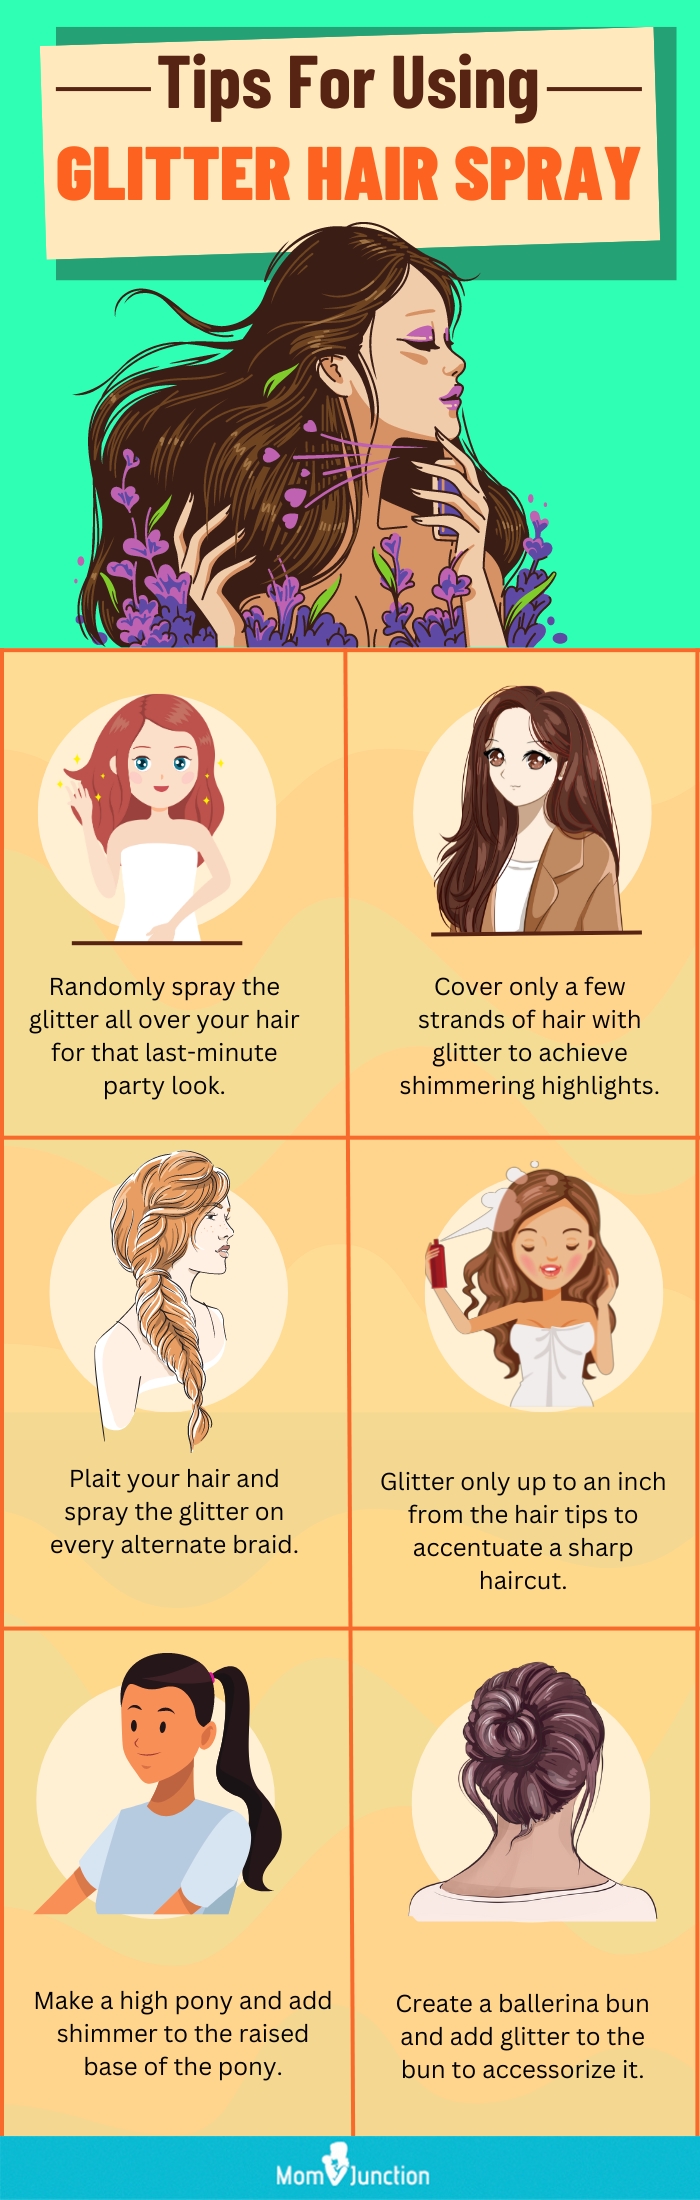 Sparkle Body Mist Spray Shiny Glitter Spray For Clothes And Hair Prom  Dresses 60ml